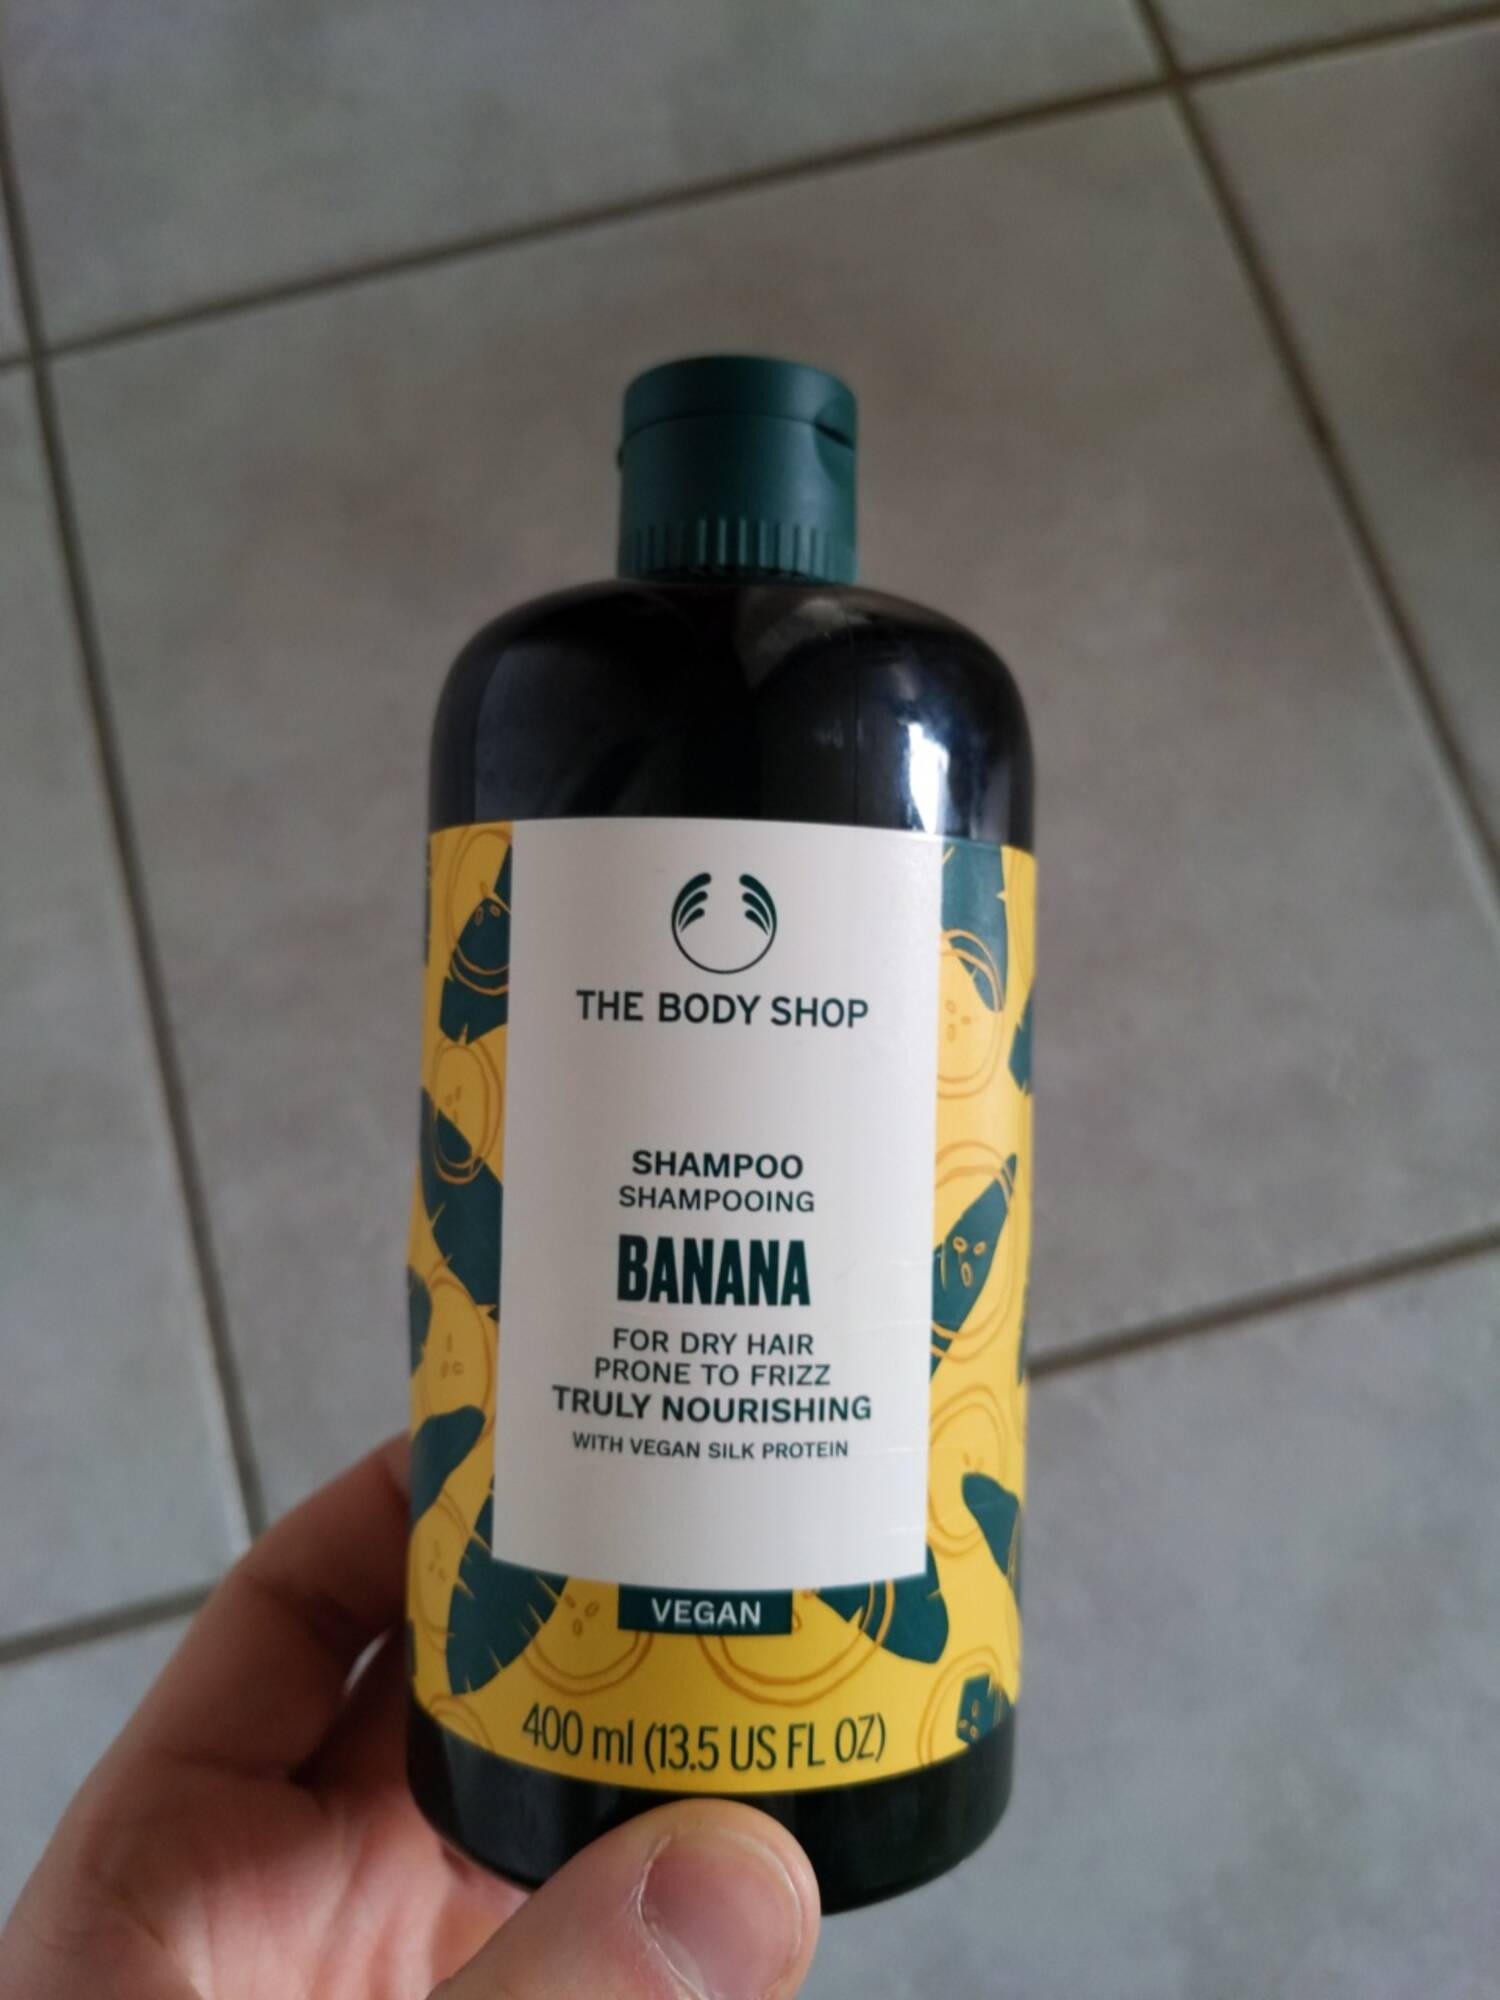 THE BODY SHOP - Banana Shampoo